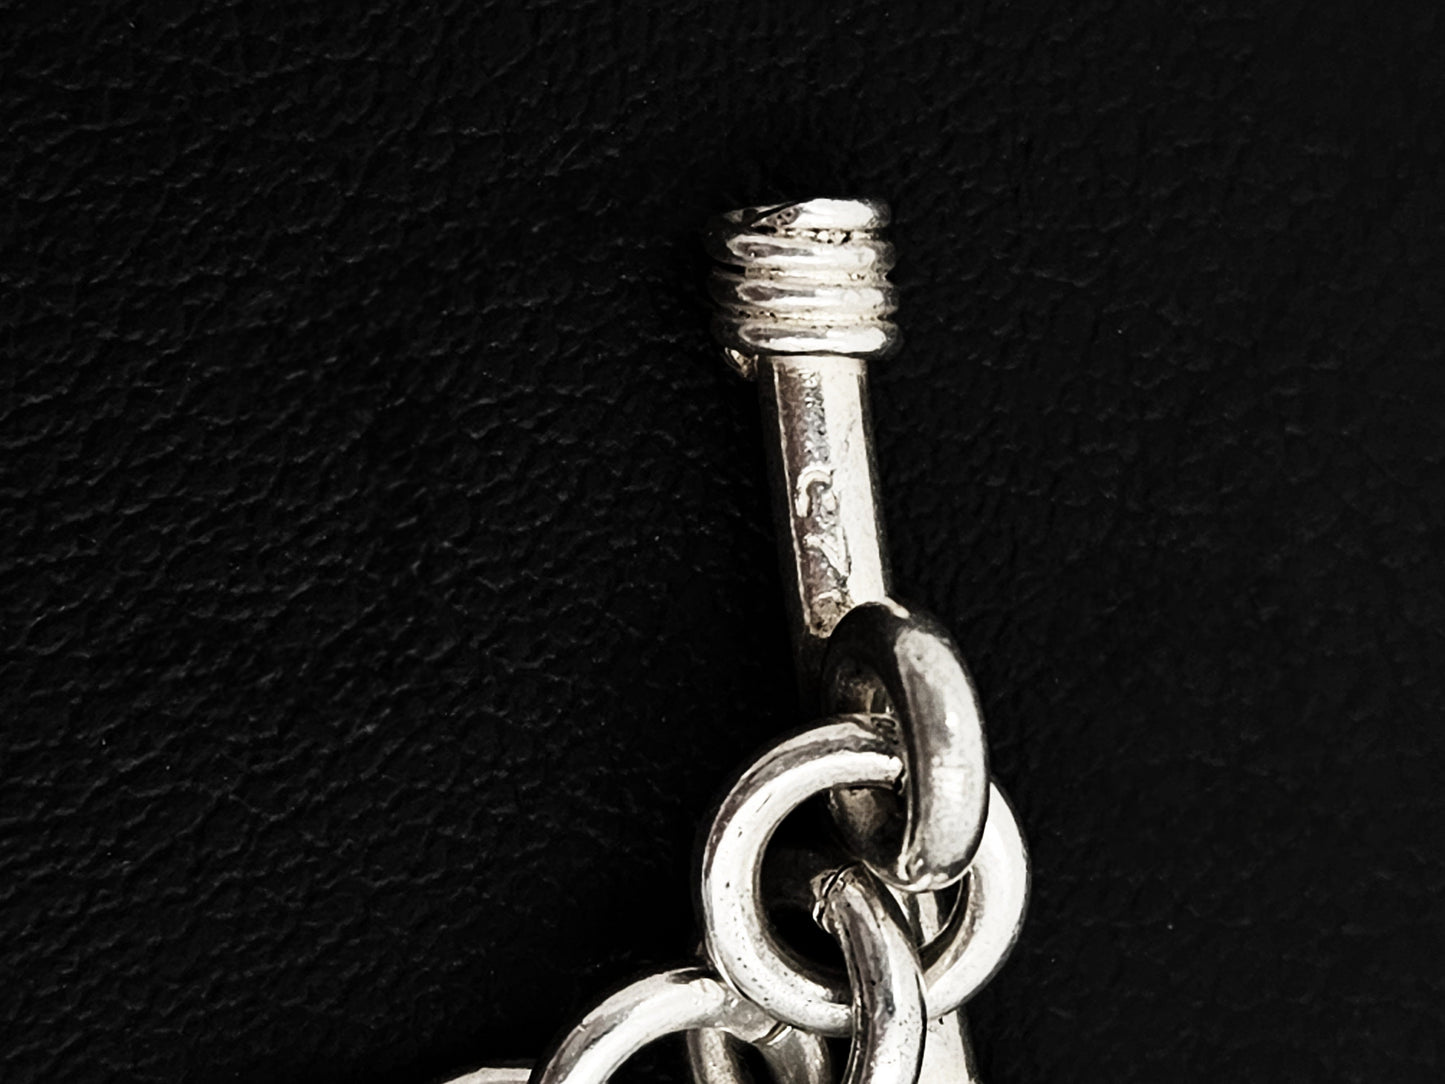 TMCMH Jewelry Designer Sterling Silver Necklace Circa